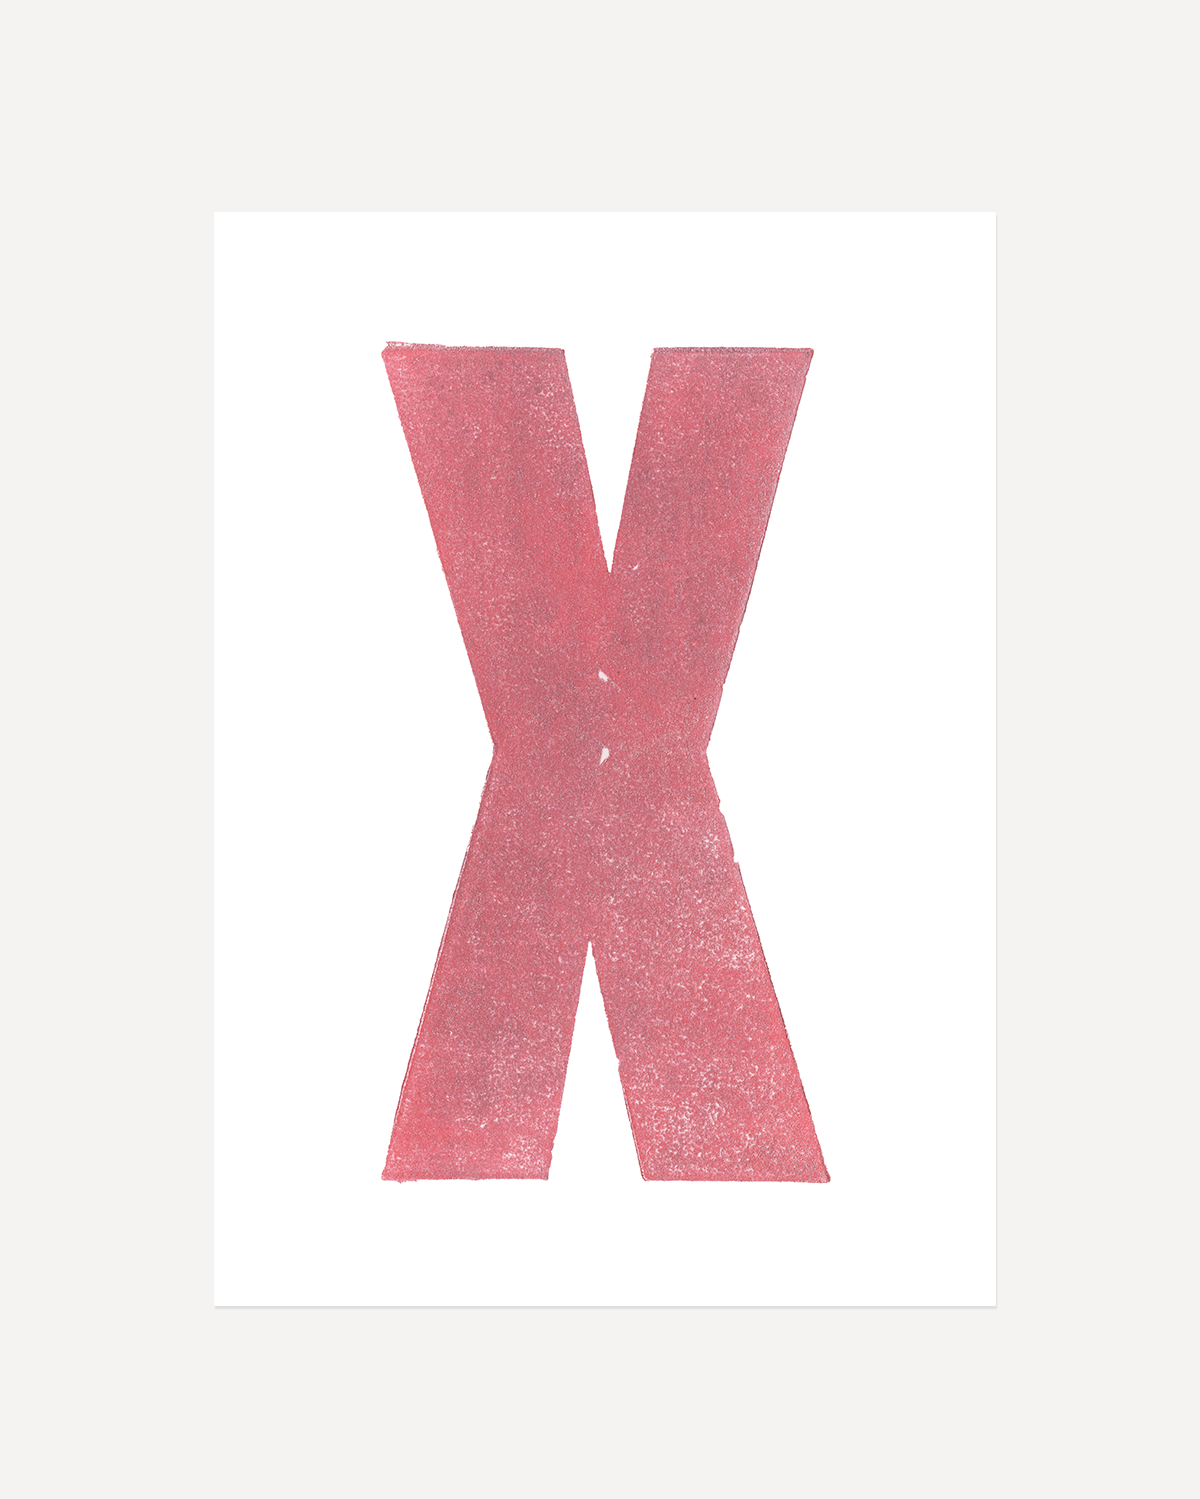 X - Letterpress Print in Pink by The Rik Barwick Studio